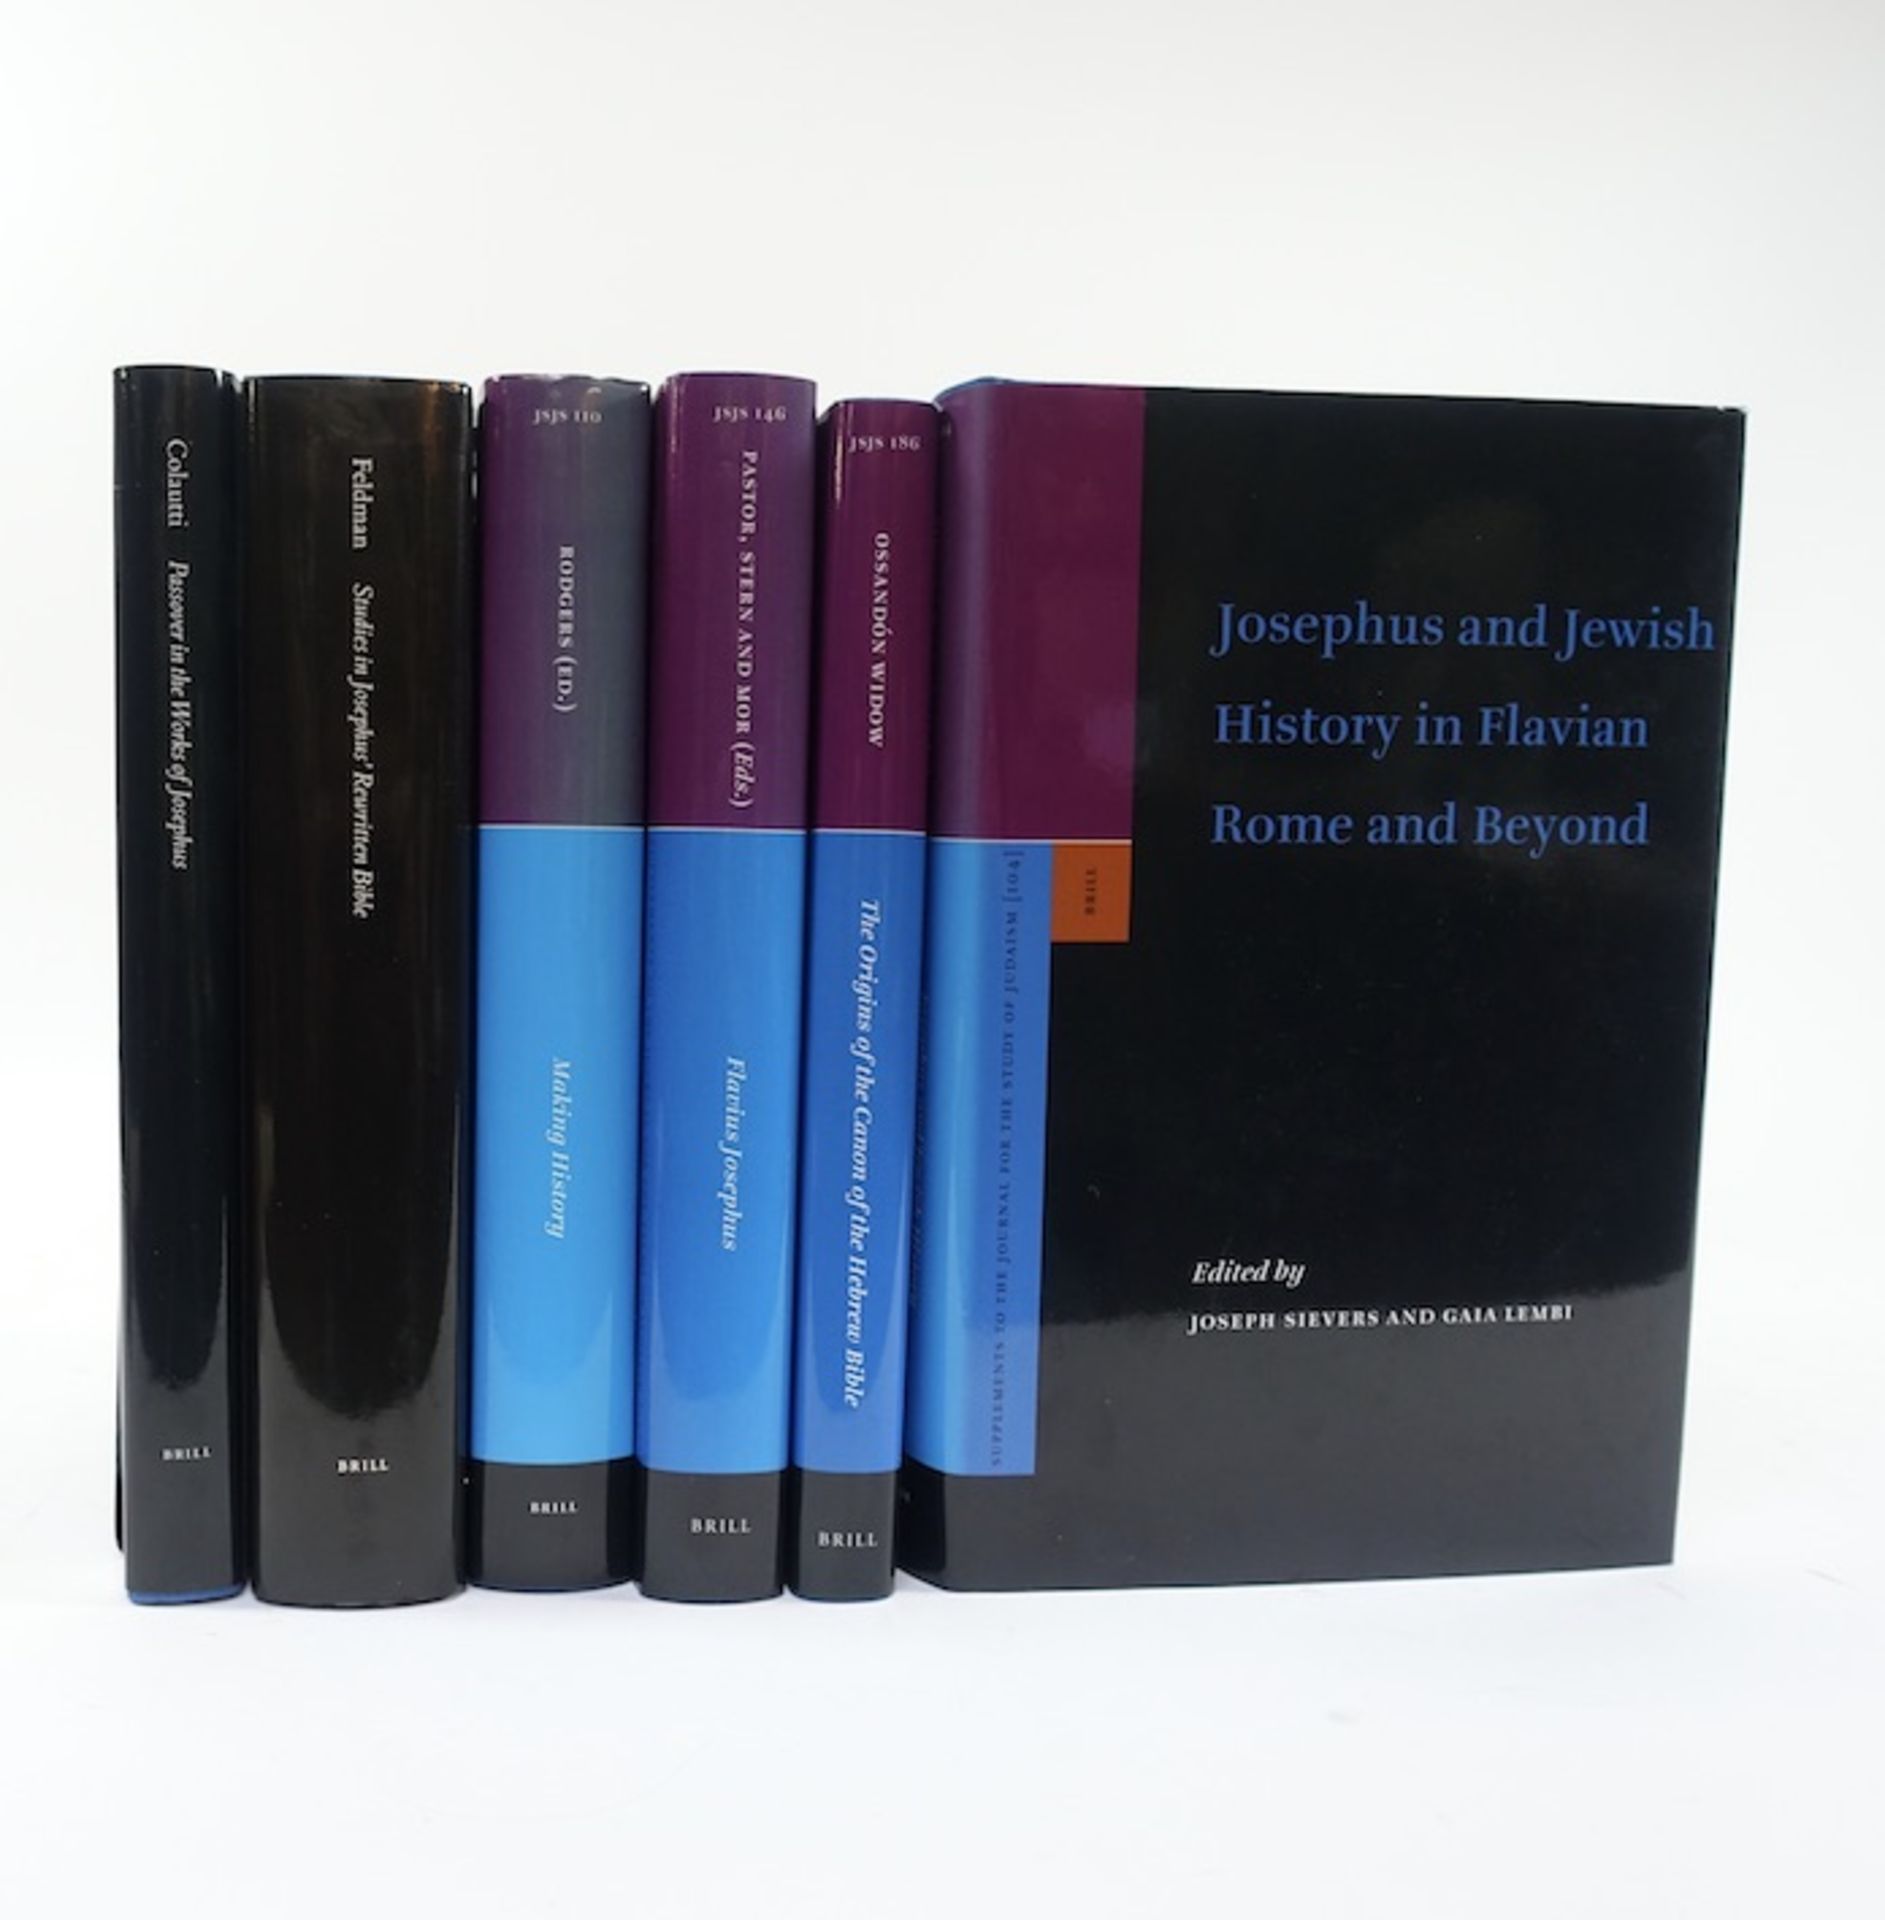 FLAVIUS JOSEPHUS -- SIEVERS, J. & G. LEMBI, eds. Josephus and Jewish history in Flavian Rome and